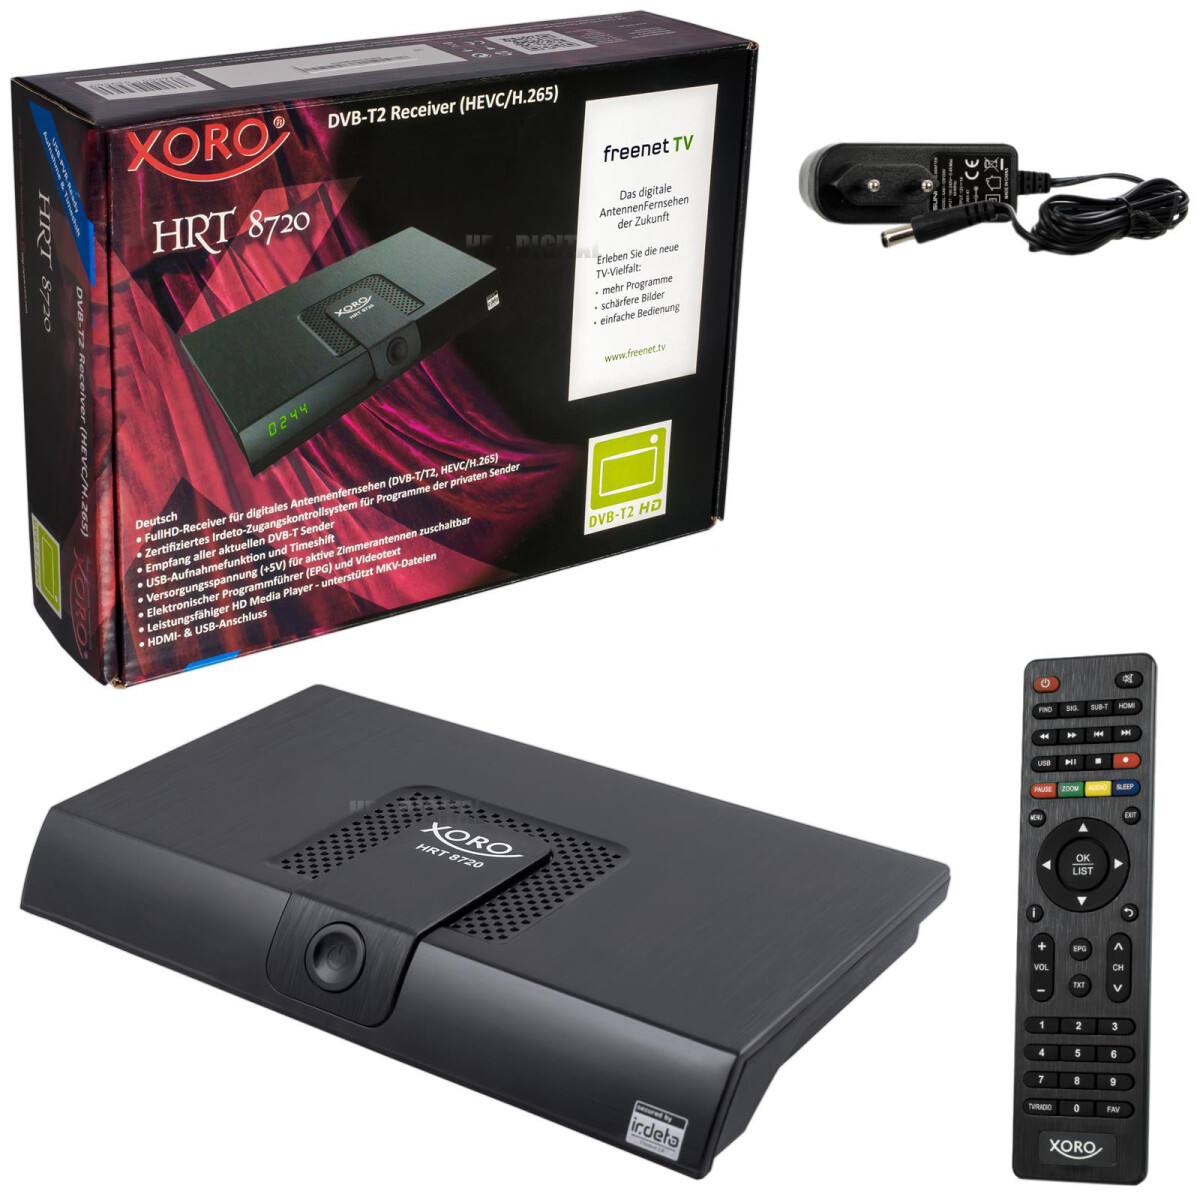 PVR Ready USB Mediaplayer schwarz HDTV HDMI Kabel + aktive DVBT-2 Antenne netshop 25 Set: Xoro HRT 8720 KIT DVB-T2 Receiver 6 Monate FREENET TV 